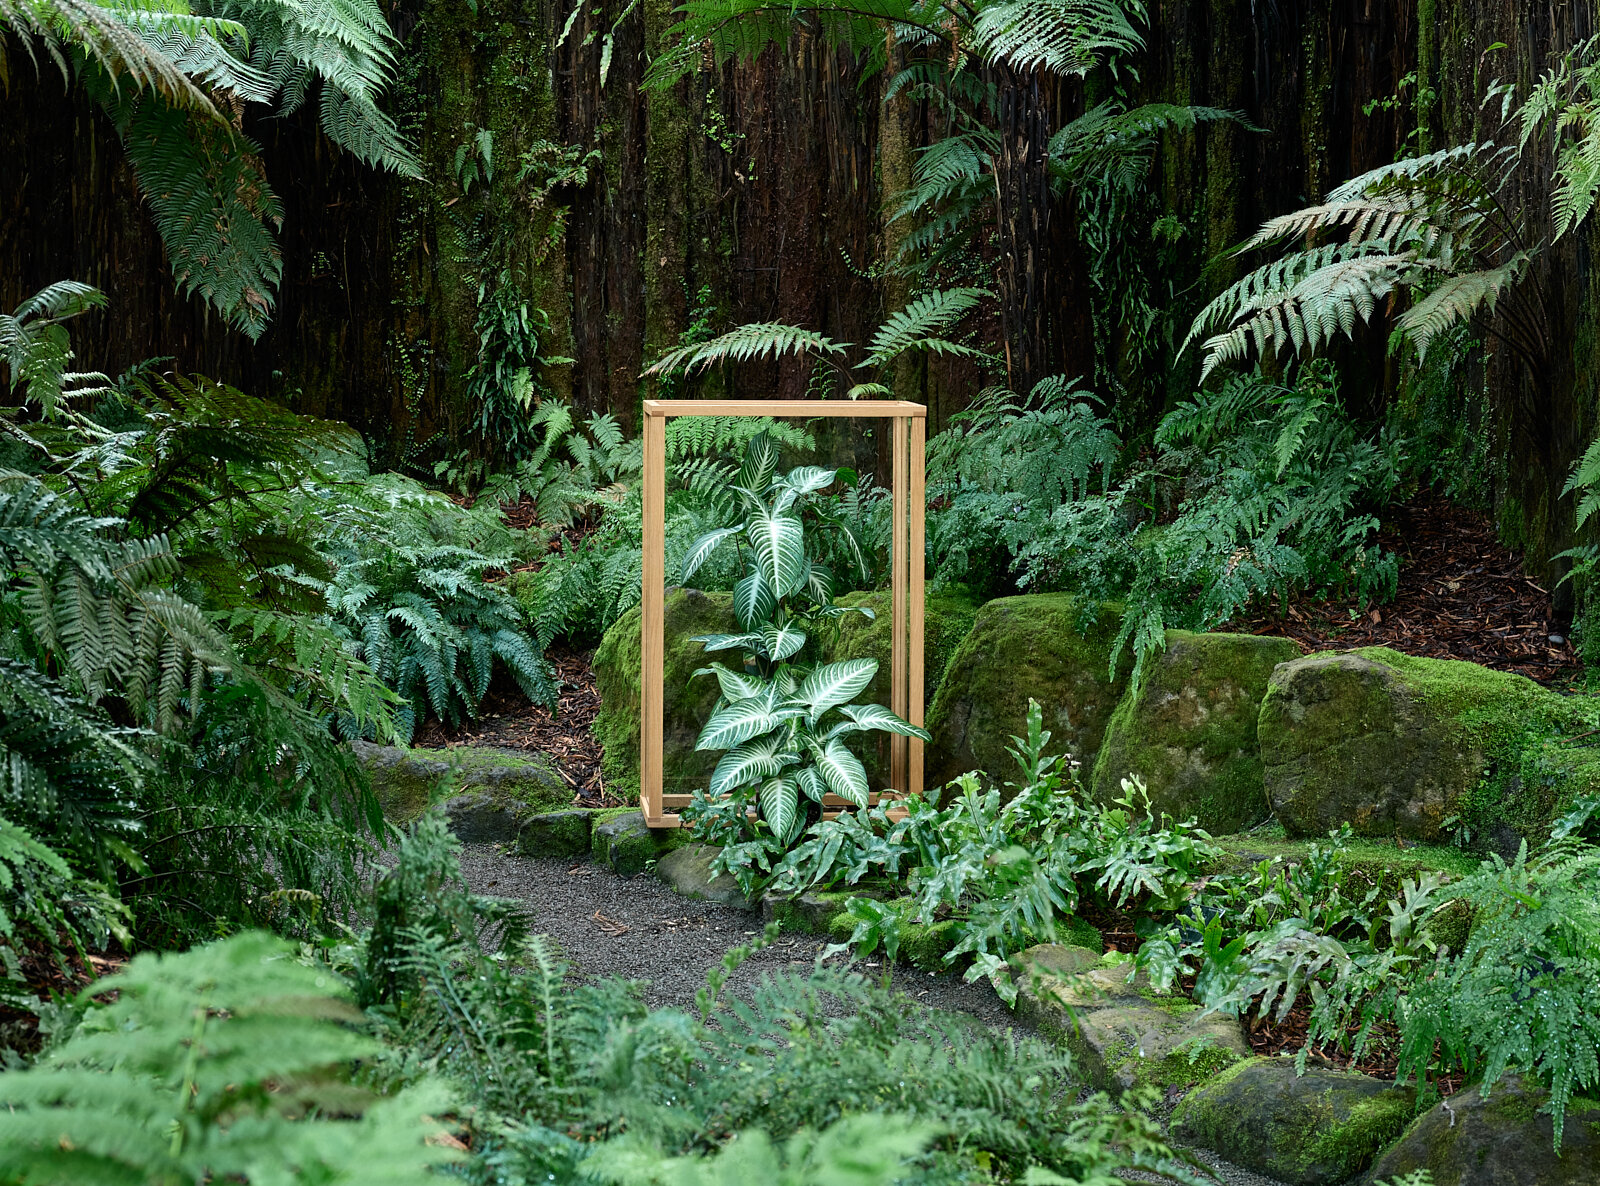   Caladium, NZ Fernery Botanic Gardens ChCh. 2020. 1080 x 830  